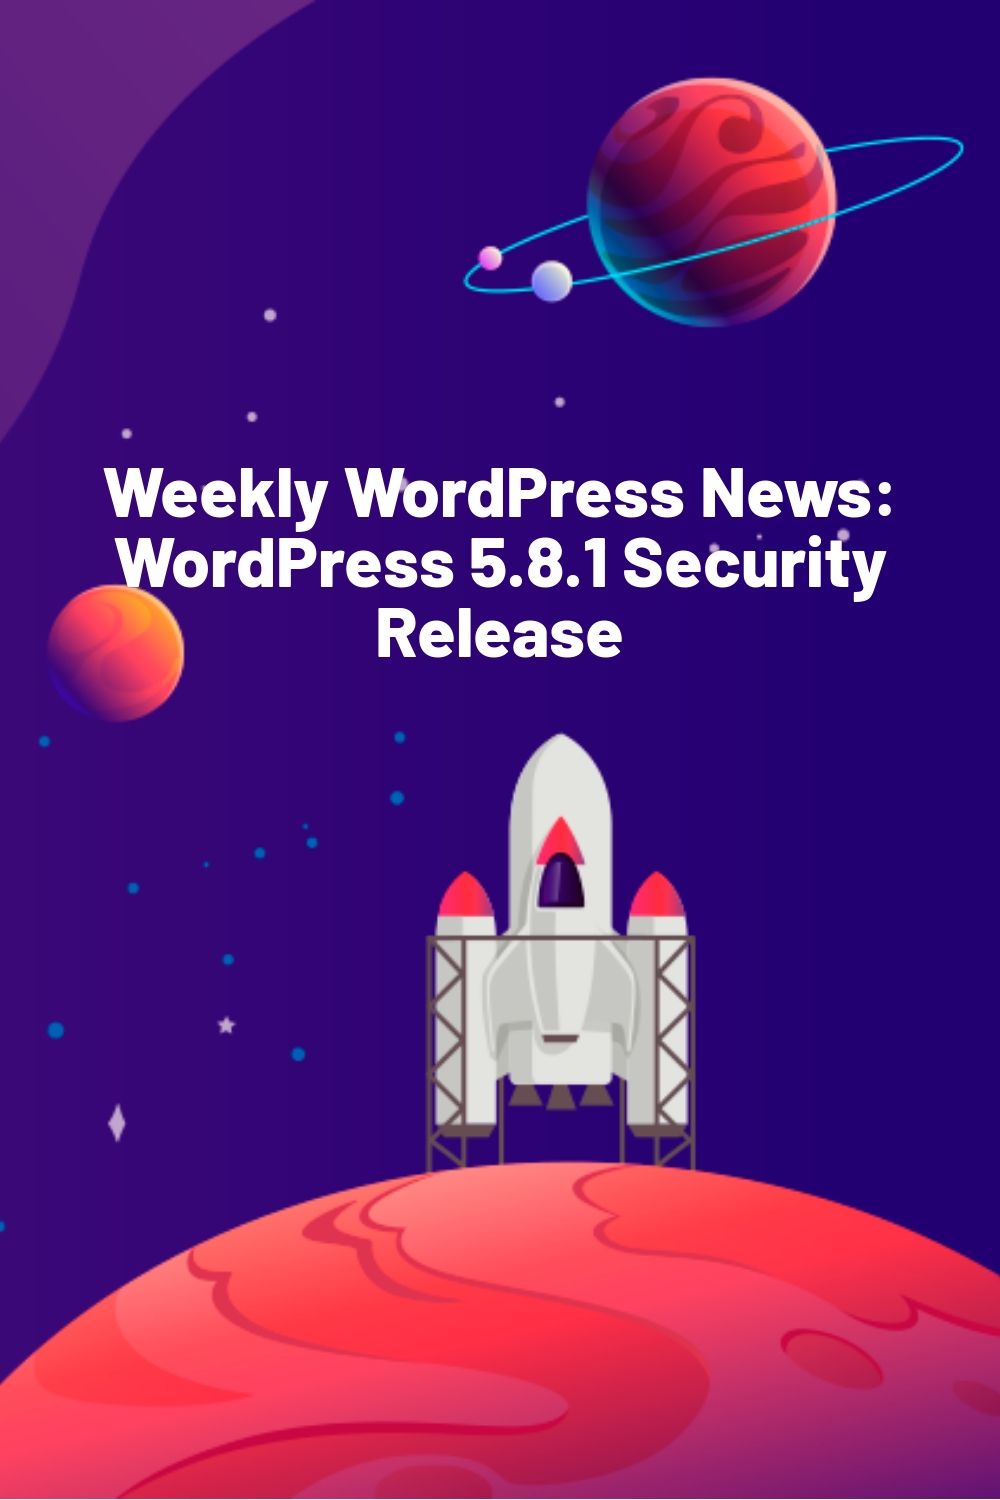 Weekly WordPress News: WordPress 5.8.1 Security Release